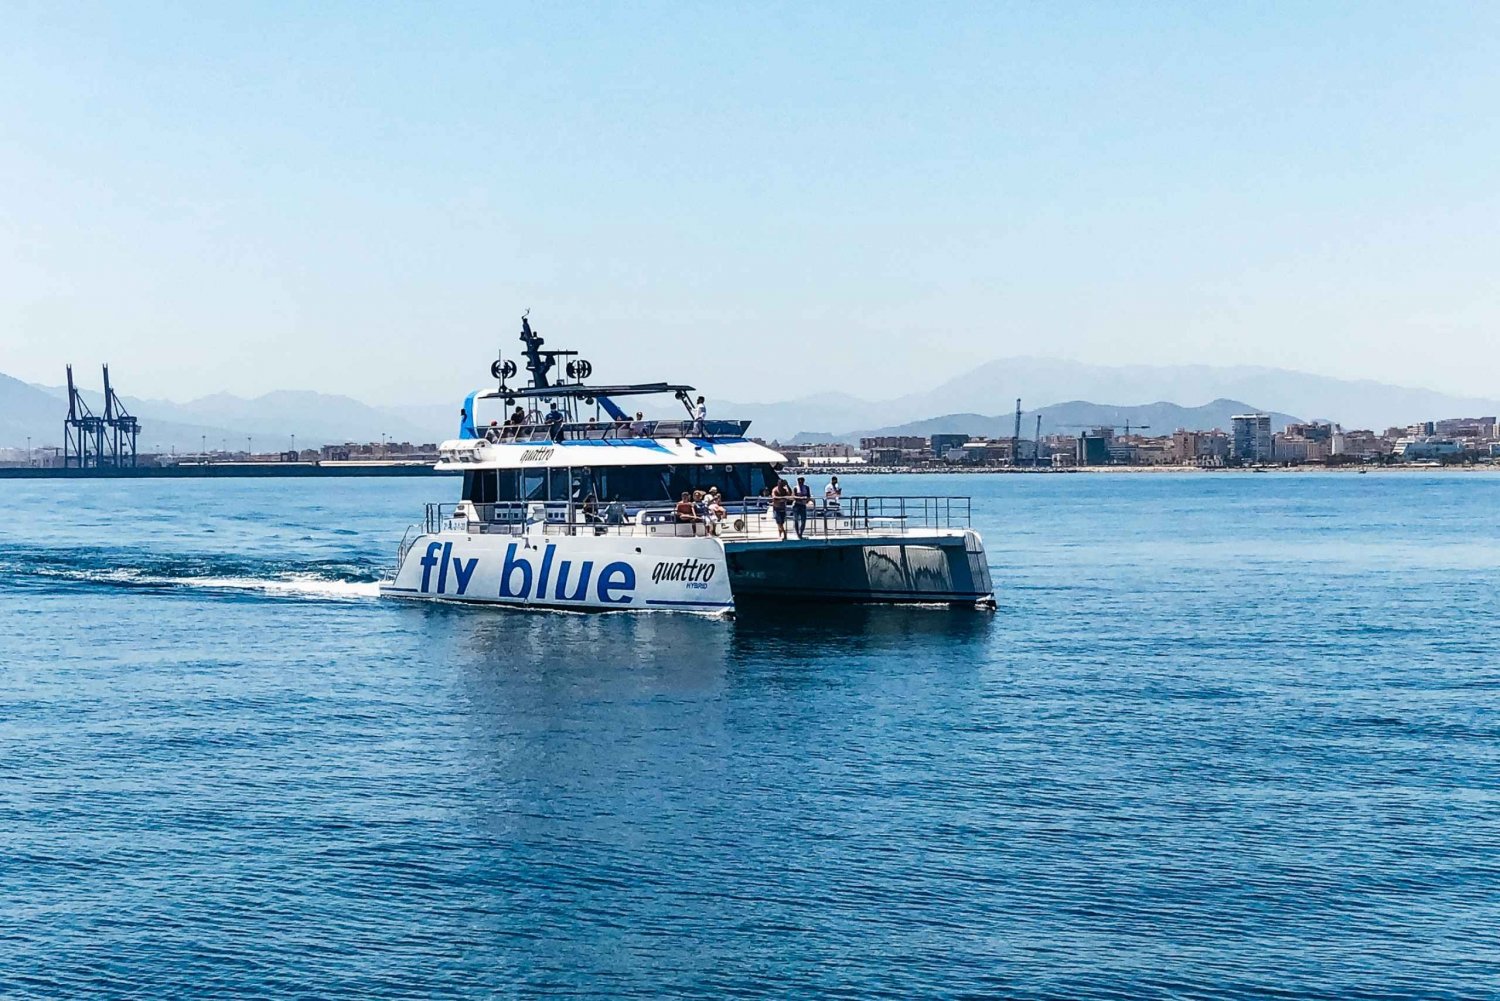 Malaga: Catamaran Cruise with Optional Swimming Stop